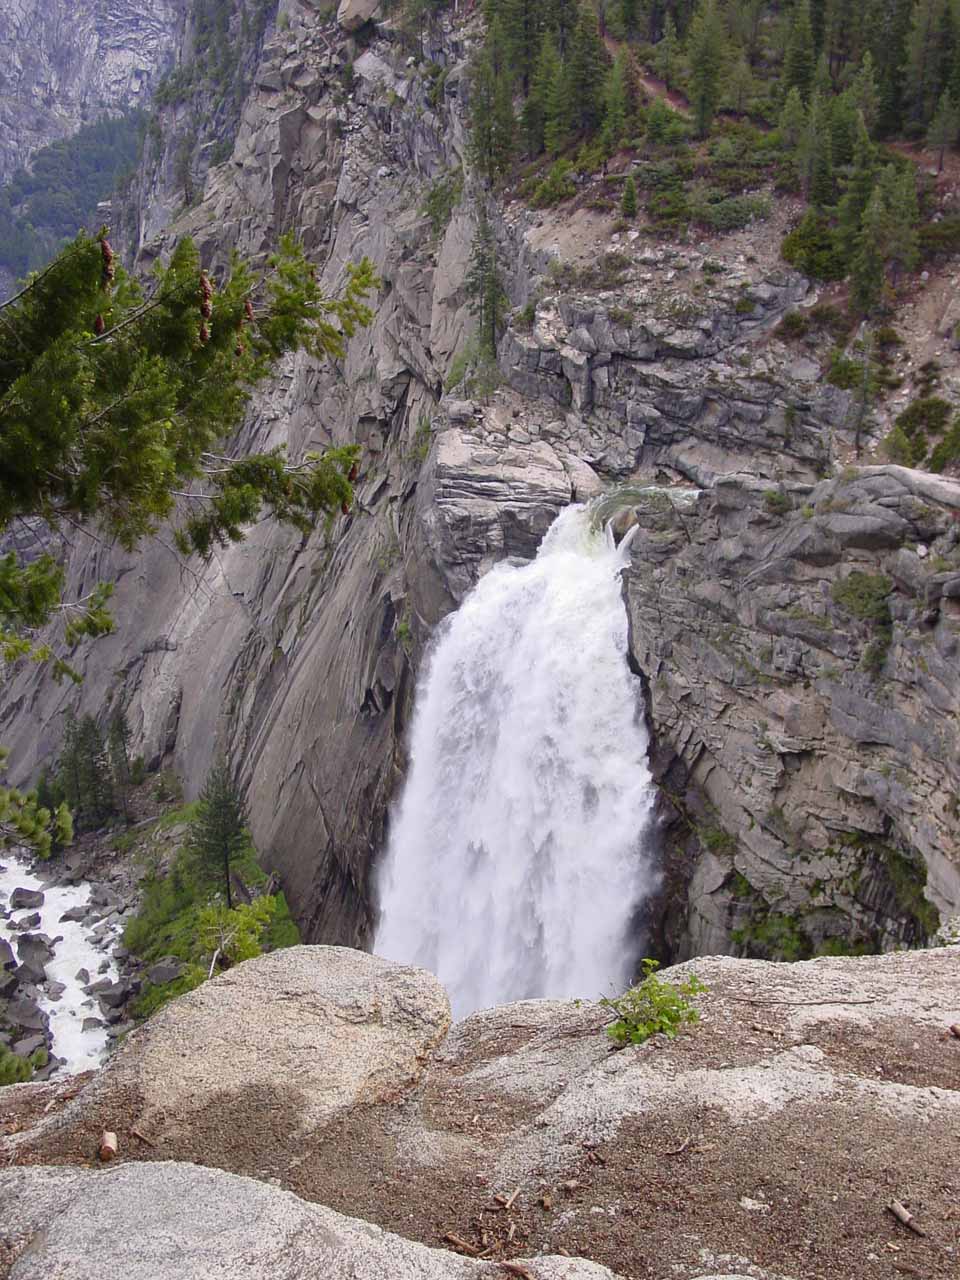 Illilouette Fall - The Largest of Yosemite's Hidden Falls